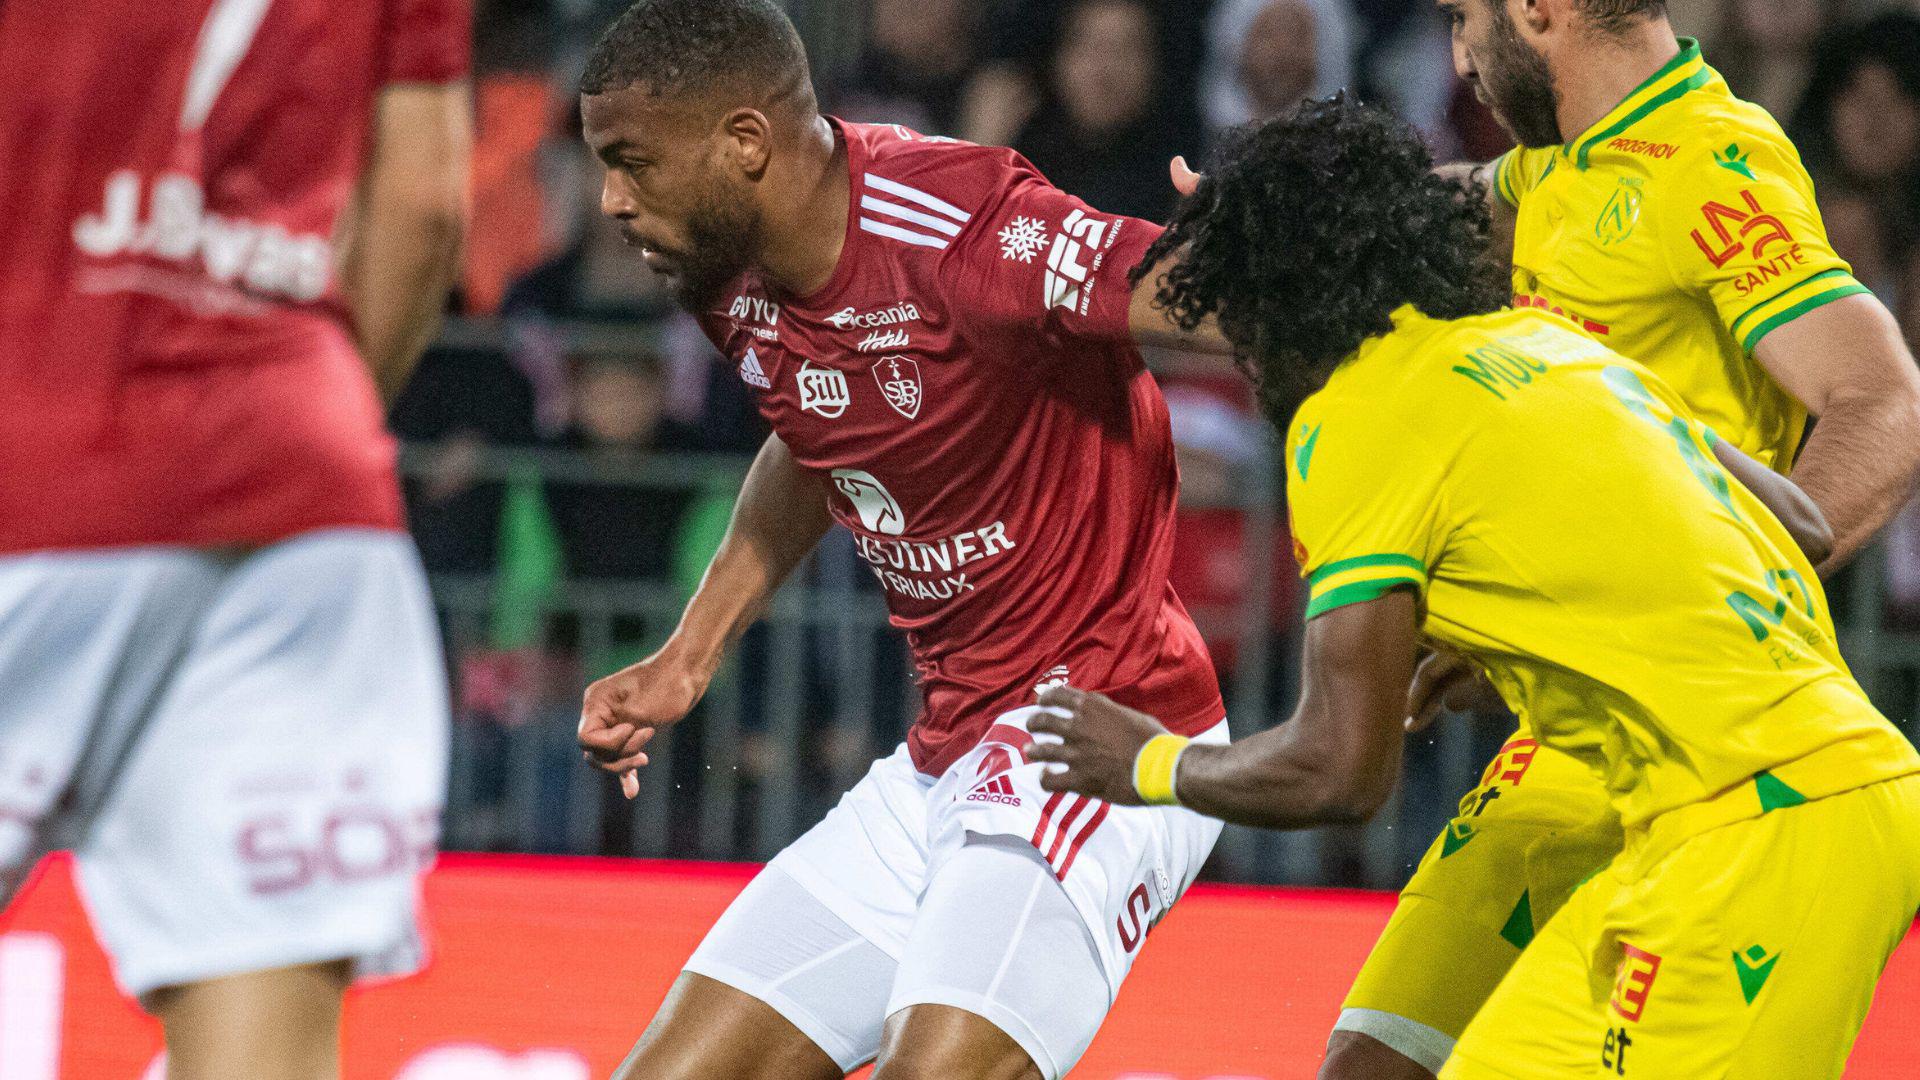 VIDEO | Ligue 1 Highlights: Stade Brest vs Nantes